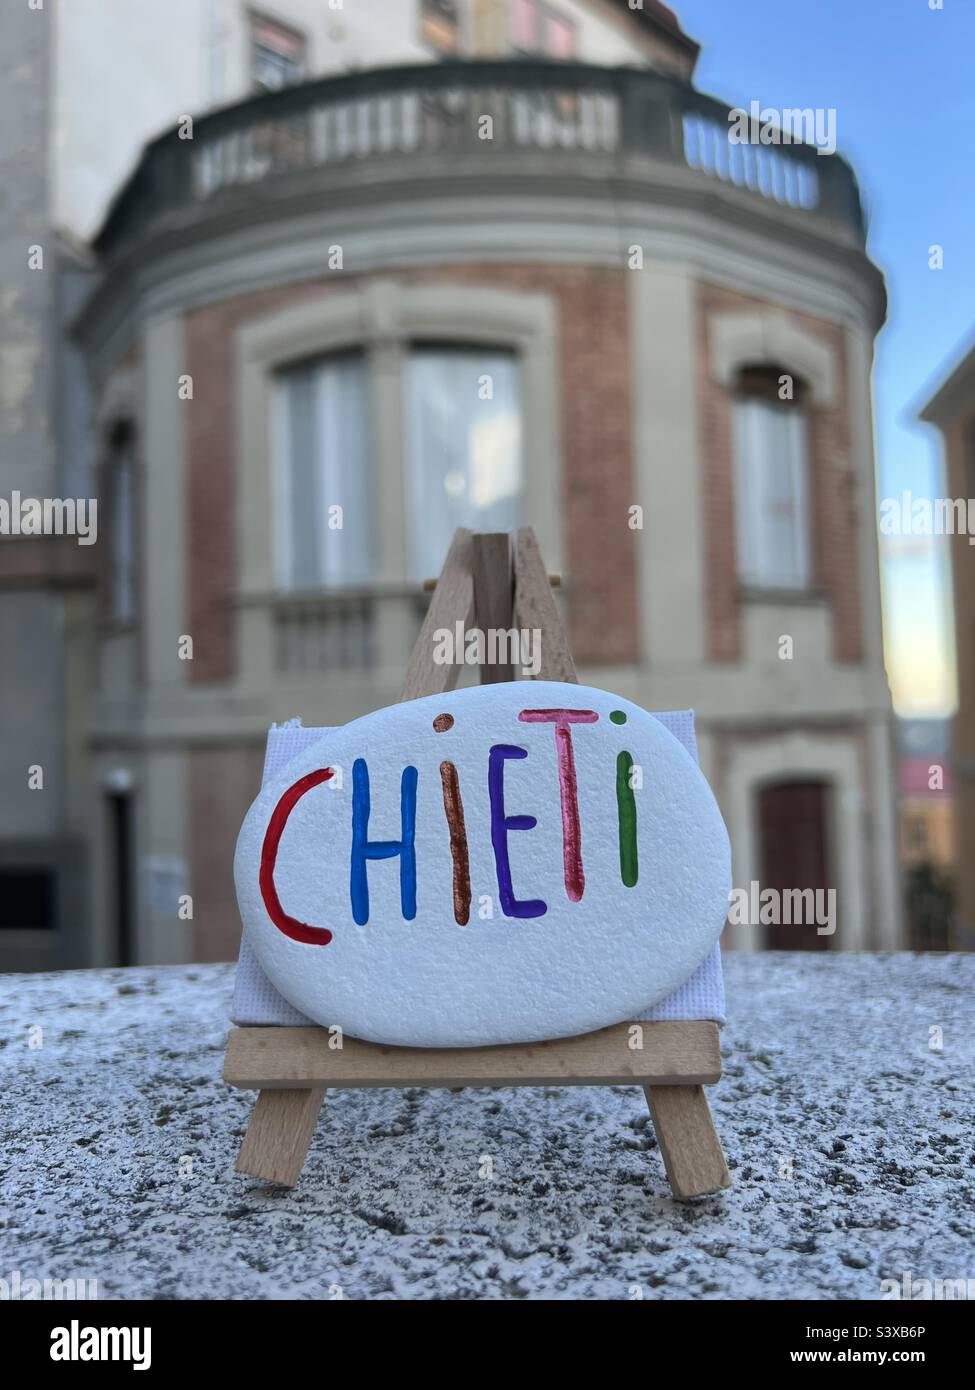 Chieti, city of Abruzzo region, hand painted stone souvenir on a canvas Stock Photo